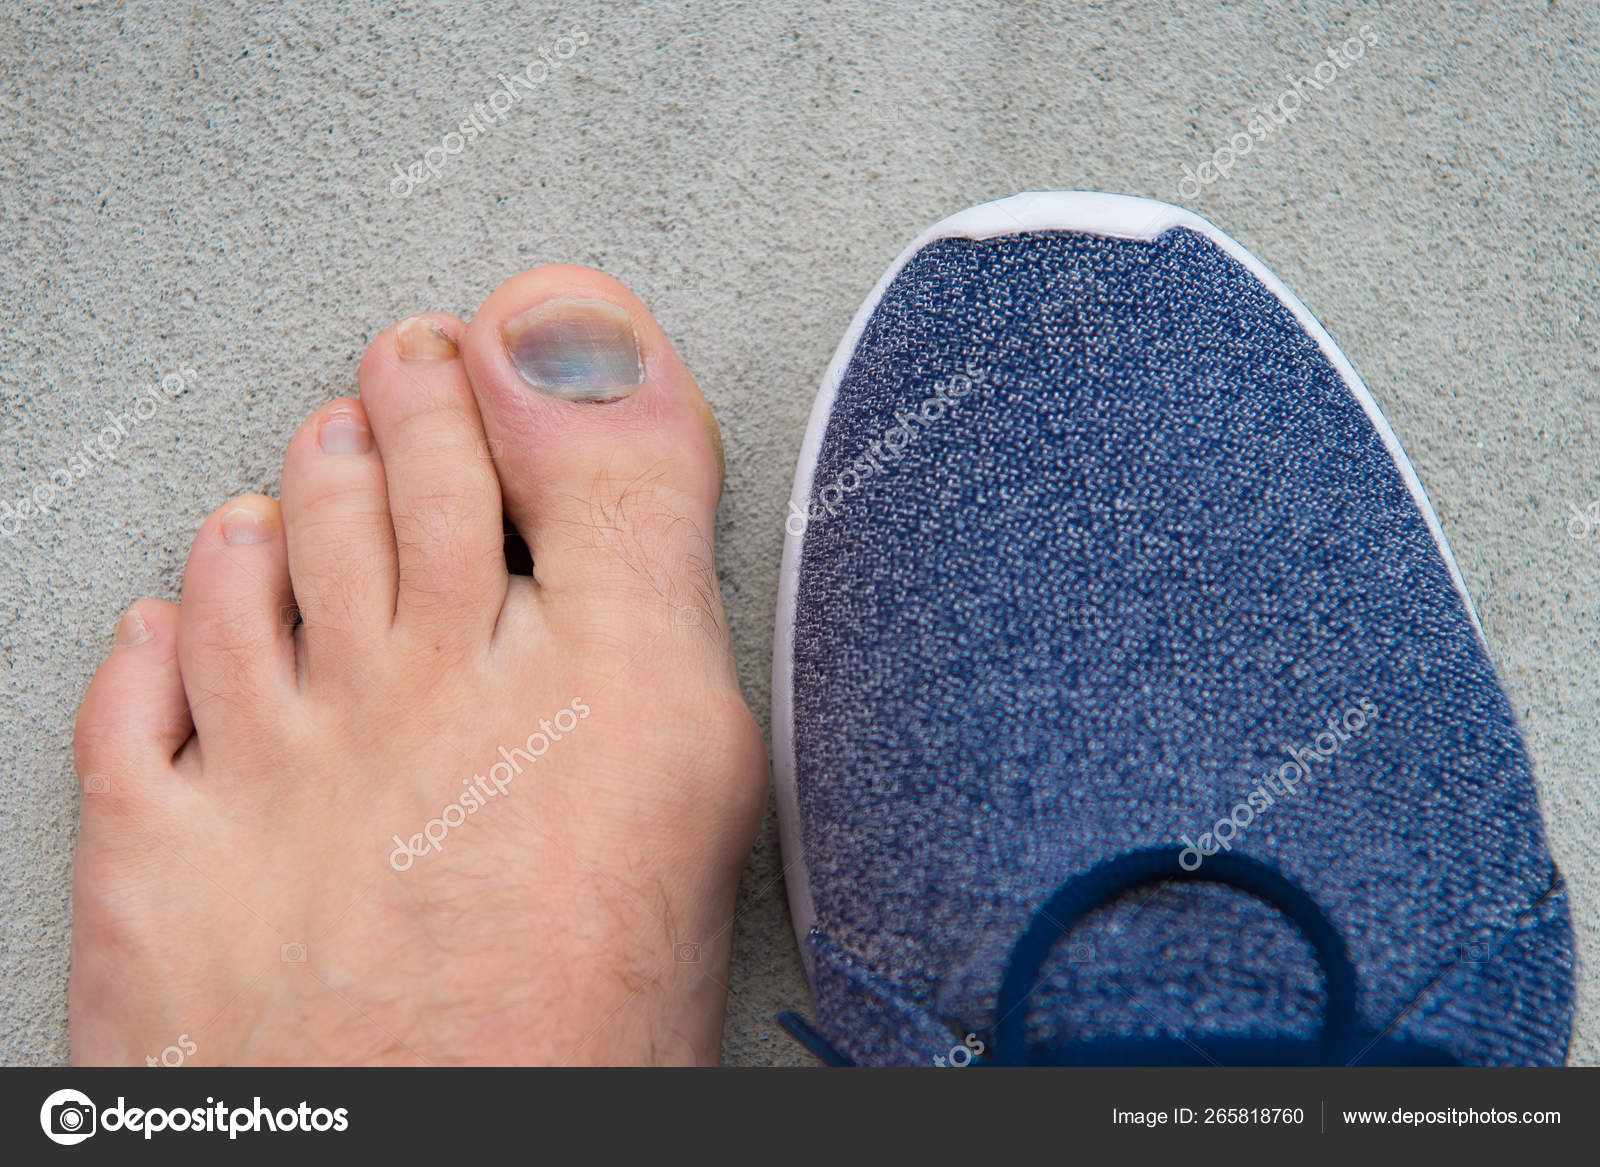 gomba nail foot medicine